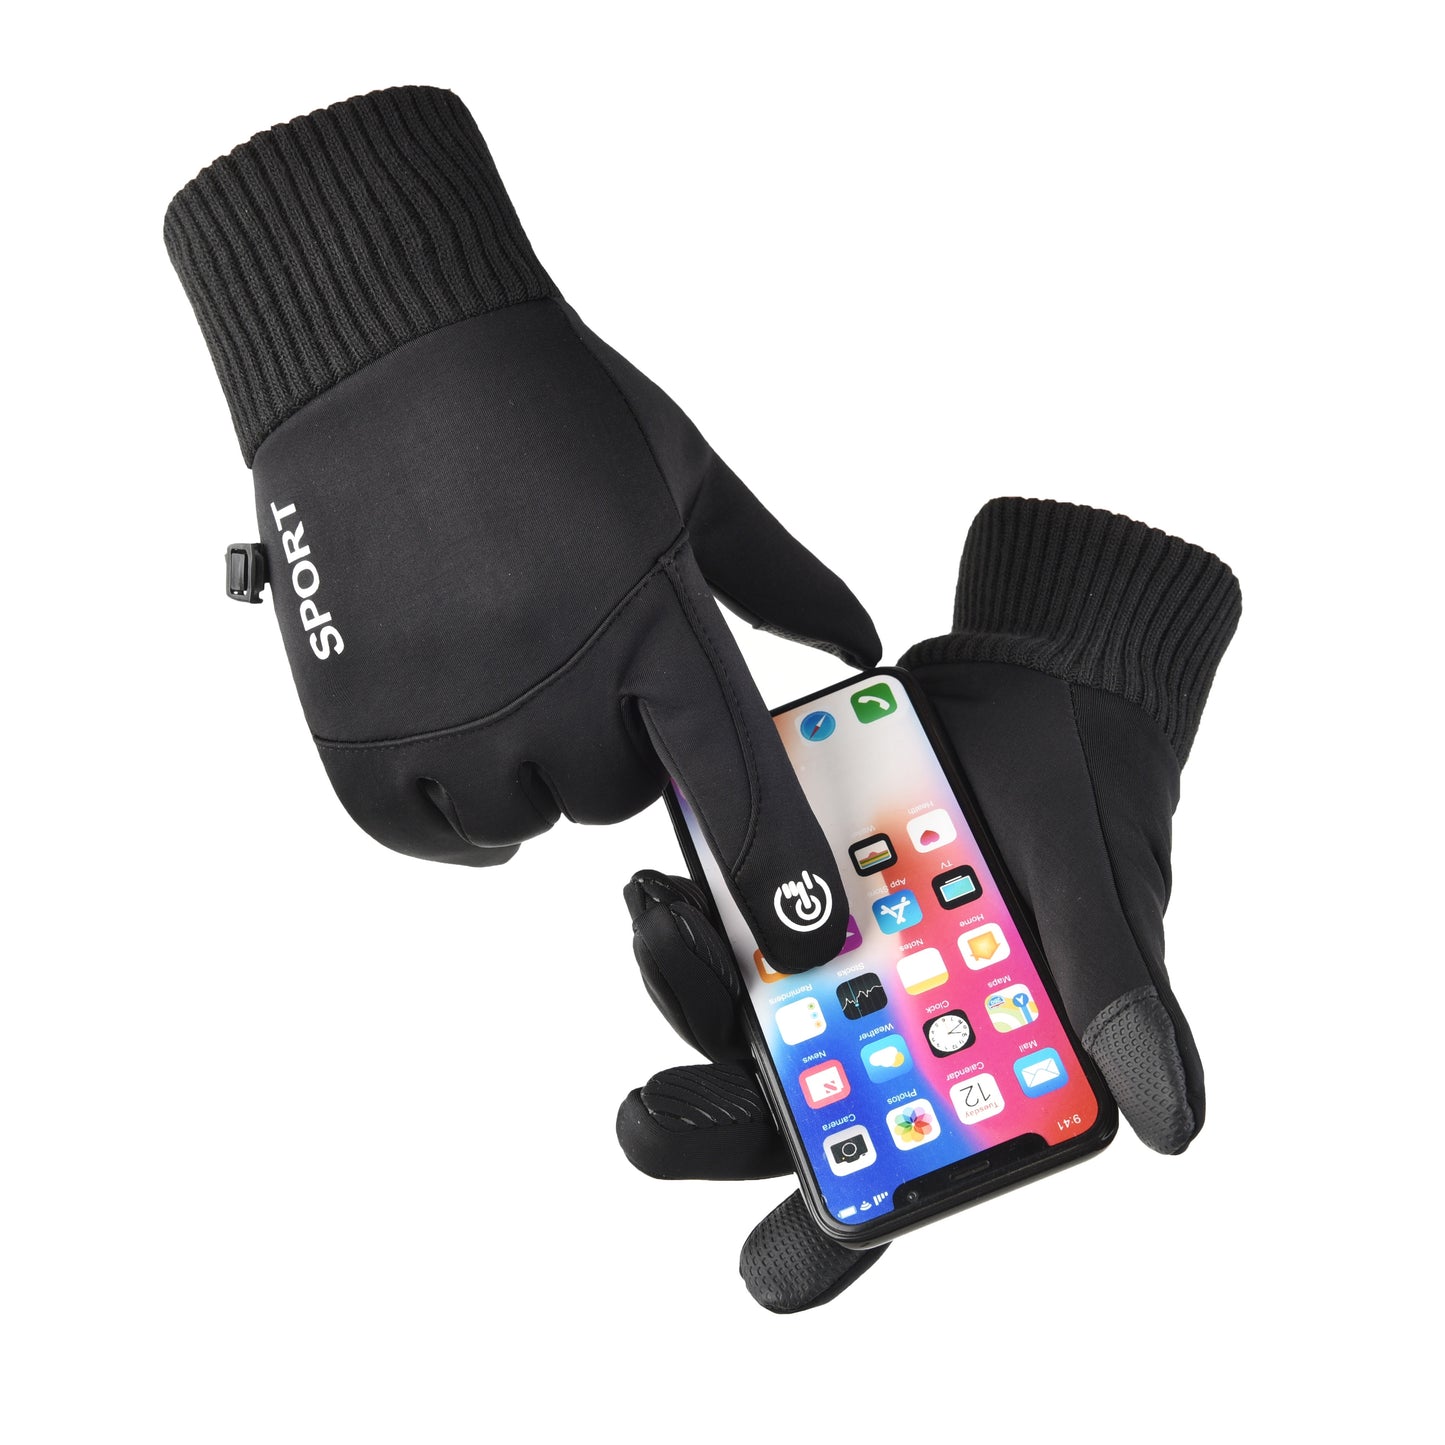 Thermi™ Touchscreen Winter Gloves